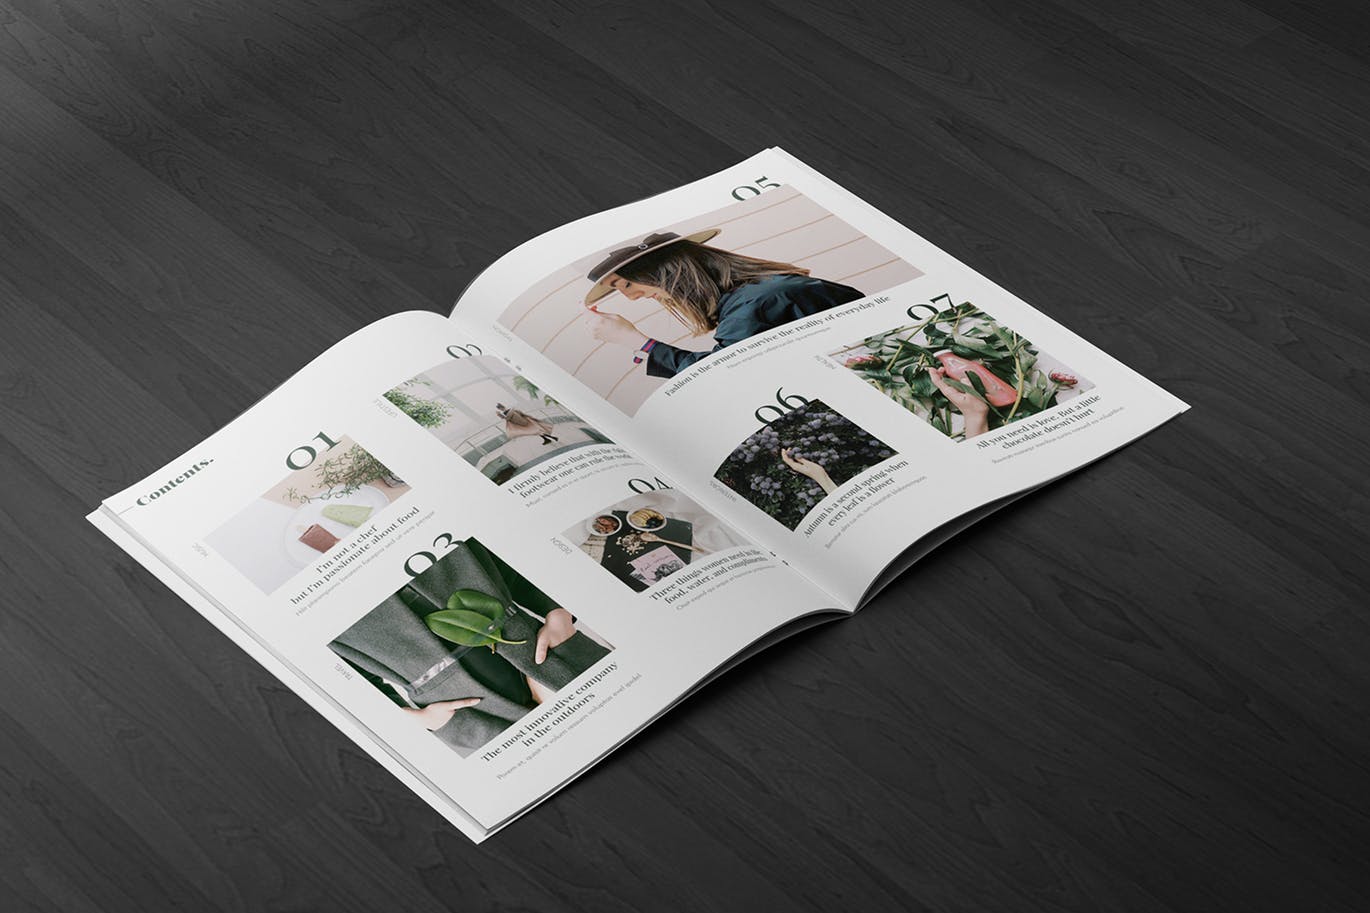 A4宣传小册子/企业画册内页版式设计45度角视图样机大洋岛精选 A4 Brochure Mockup 2 Pages Spread插图2